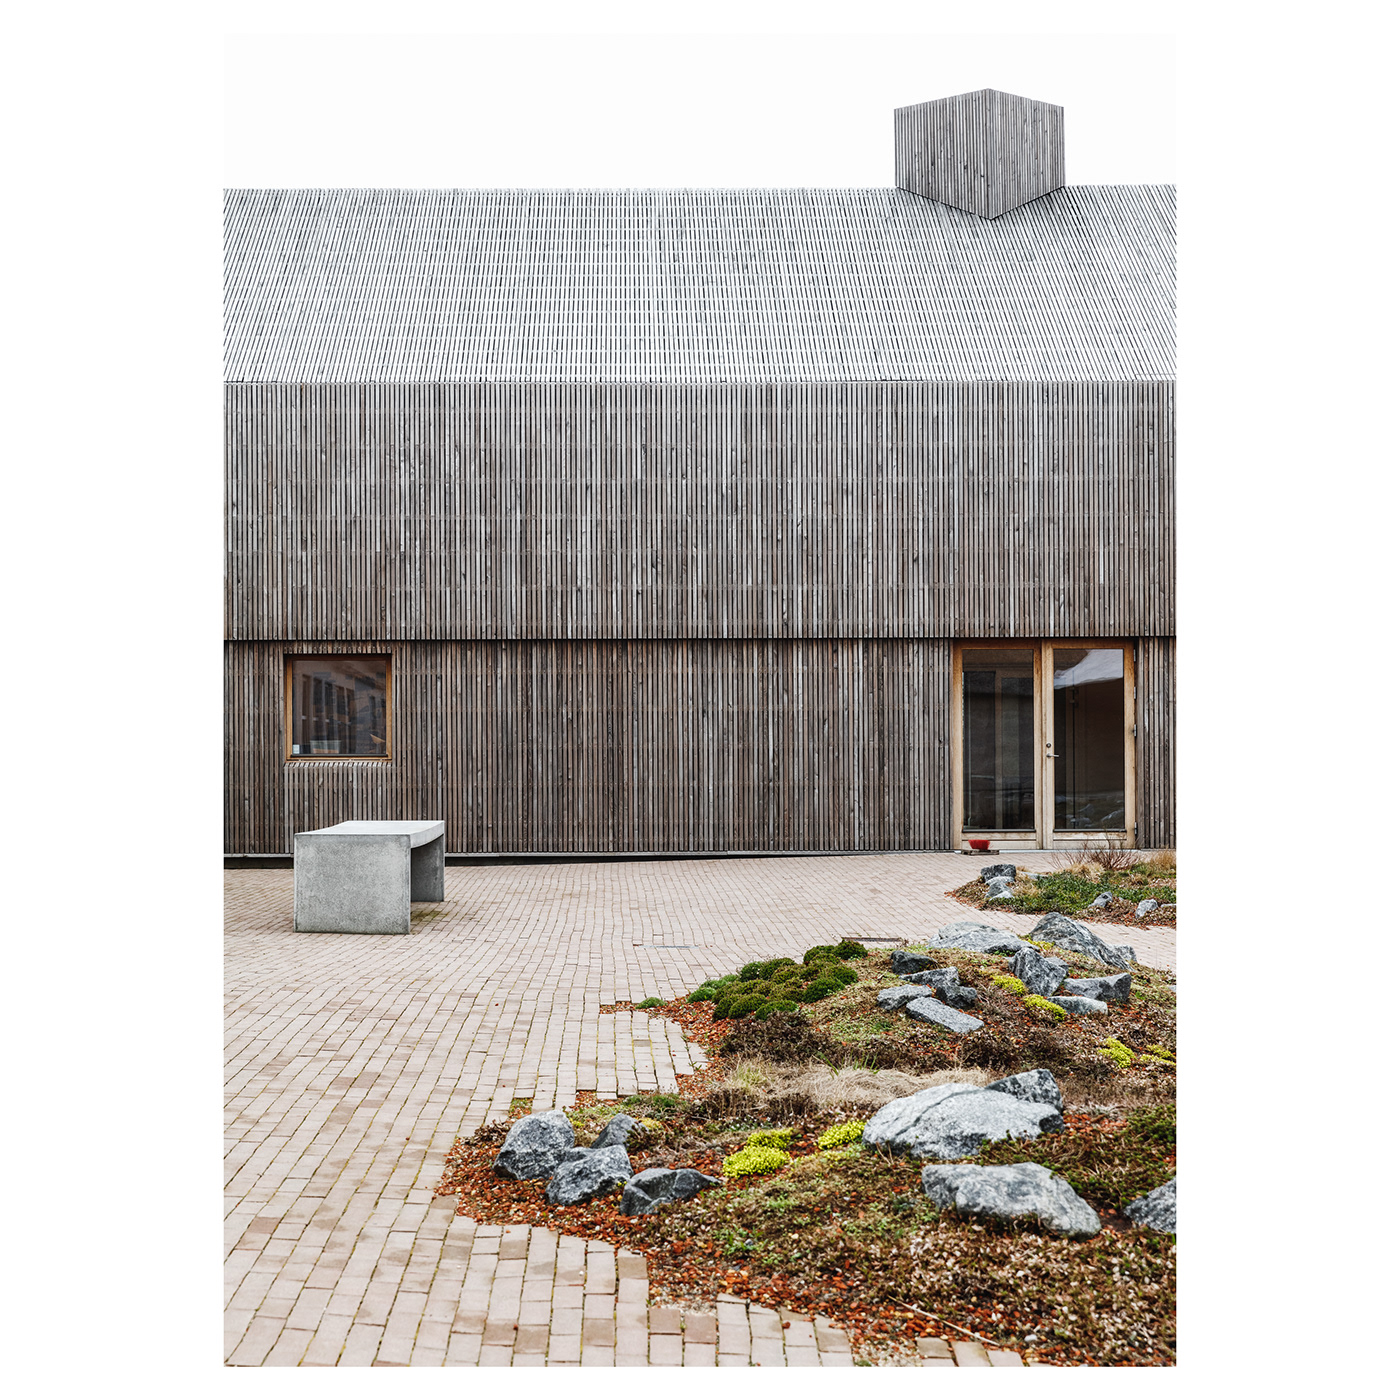 museum Scandinavia Landscape wildlife straw design denmark roof traditional